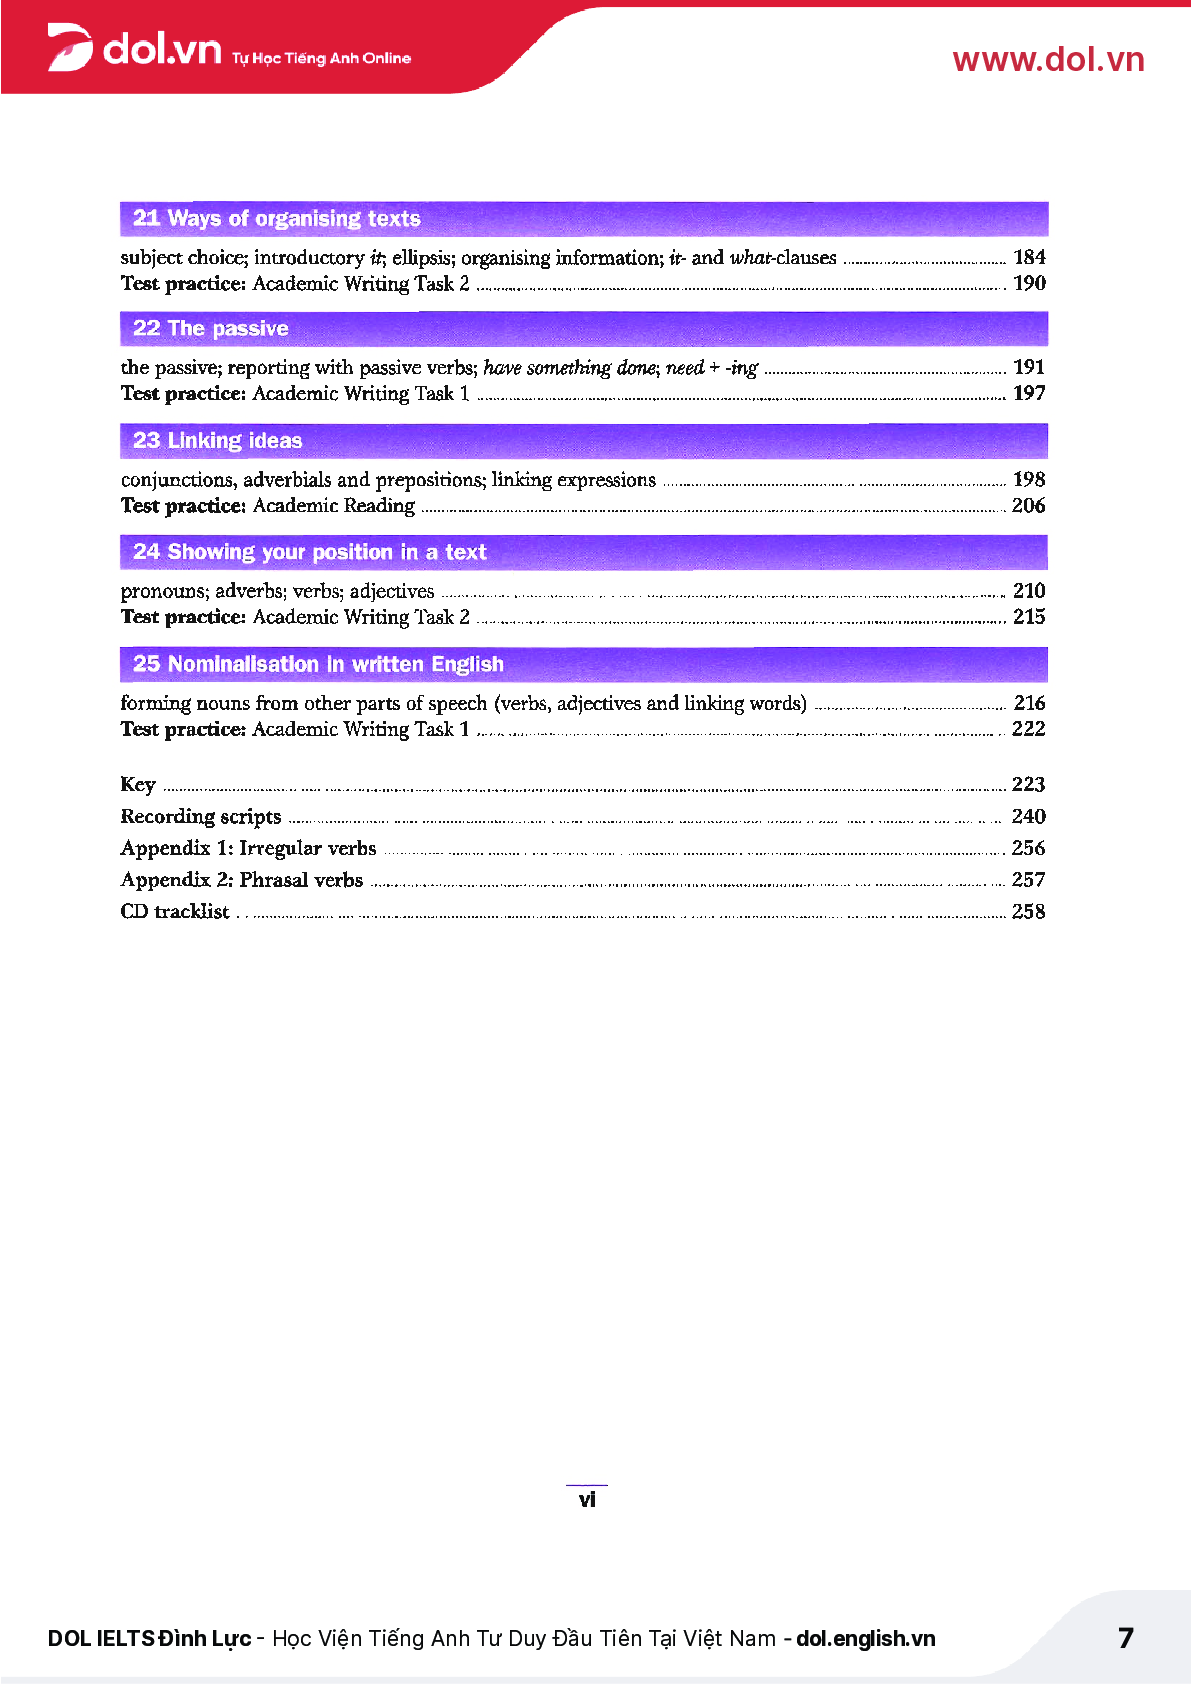 Sách Cambridge Grammar for IELTS pdf | Xem online, tải PDF miễn phí (trang 7)